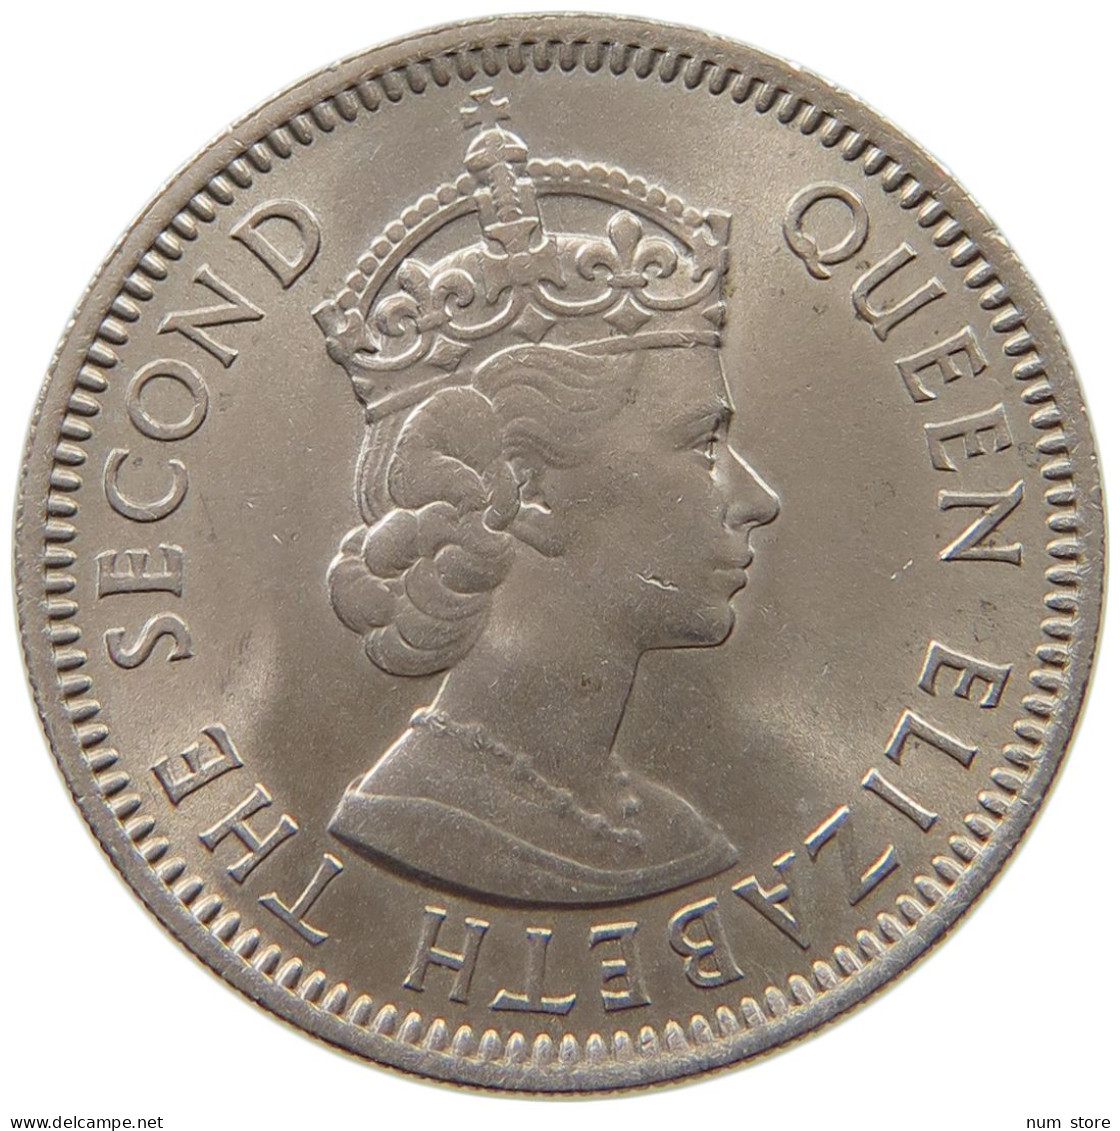 BRITISH CARIBBEAN TERRITORIES 25 CENTS 1965 Elizabeth II. (1952-2022) #s037 0255 - Caraibi Britannici (Territori)